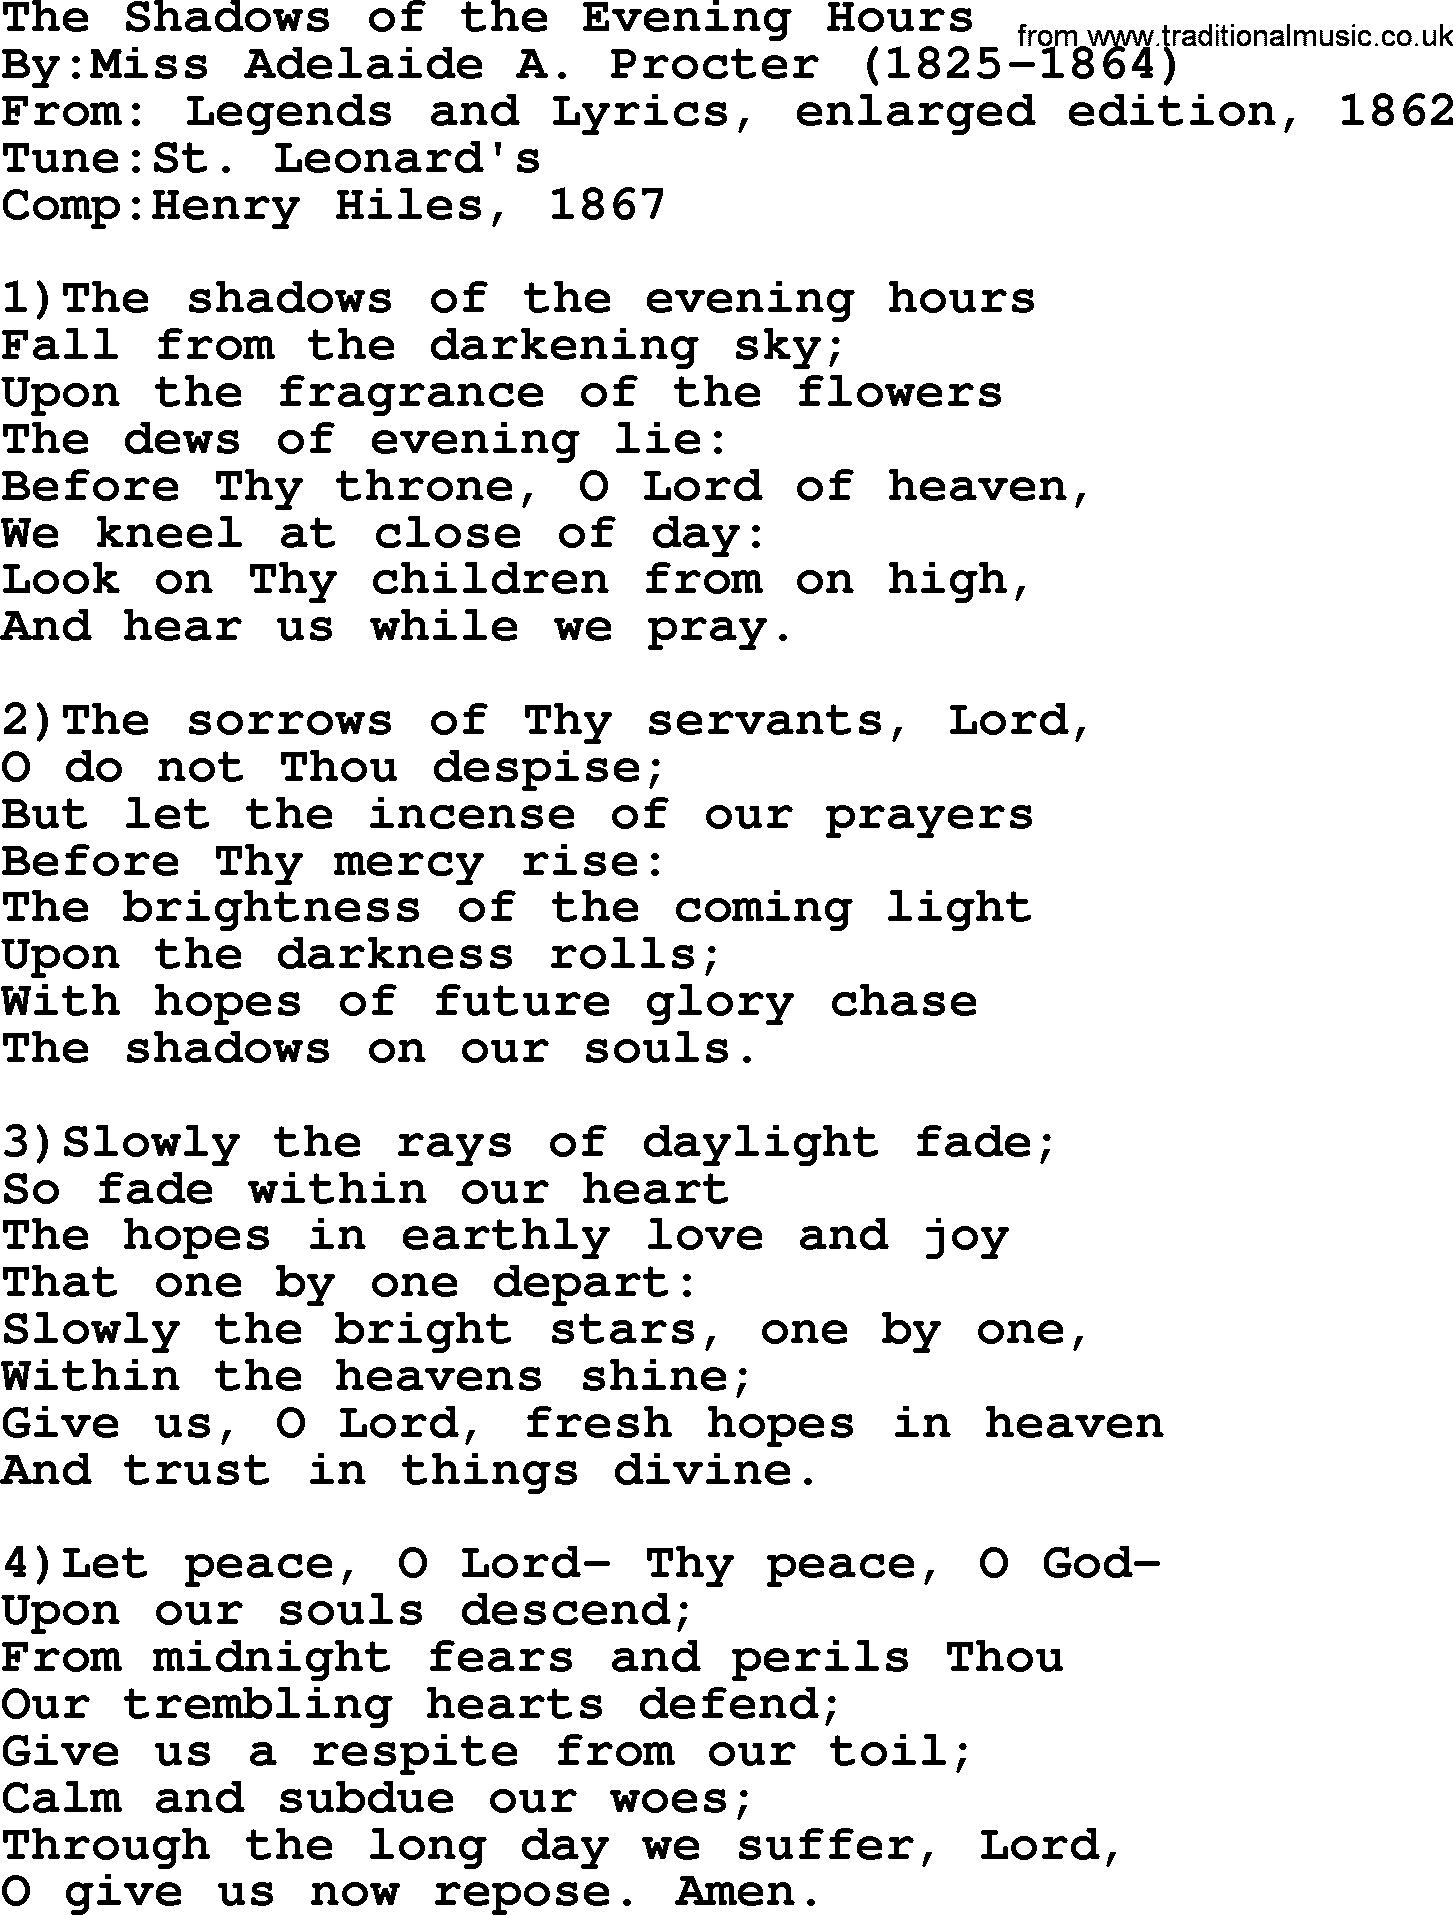 Methodist Hymn: The Shadows Of The Evening Hours, lyrics